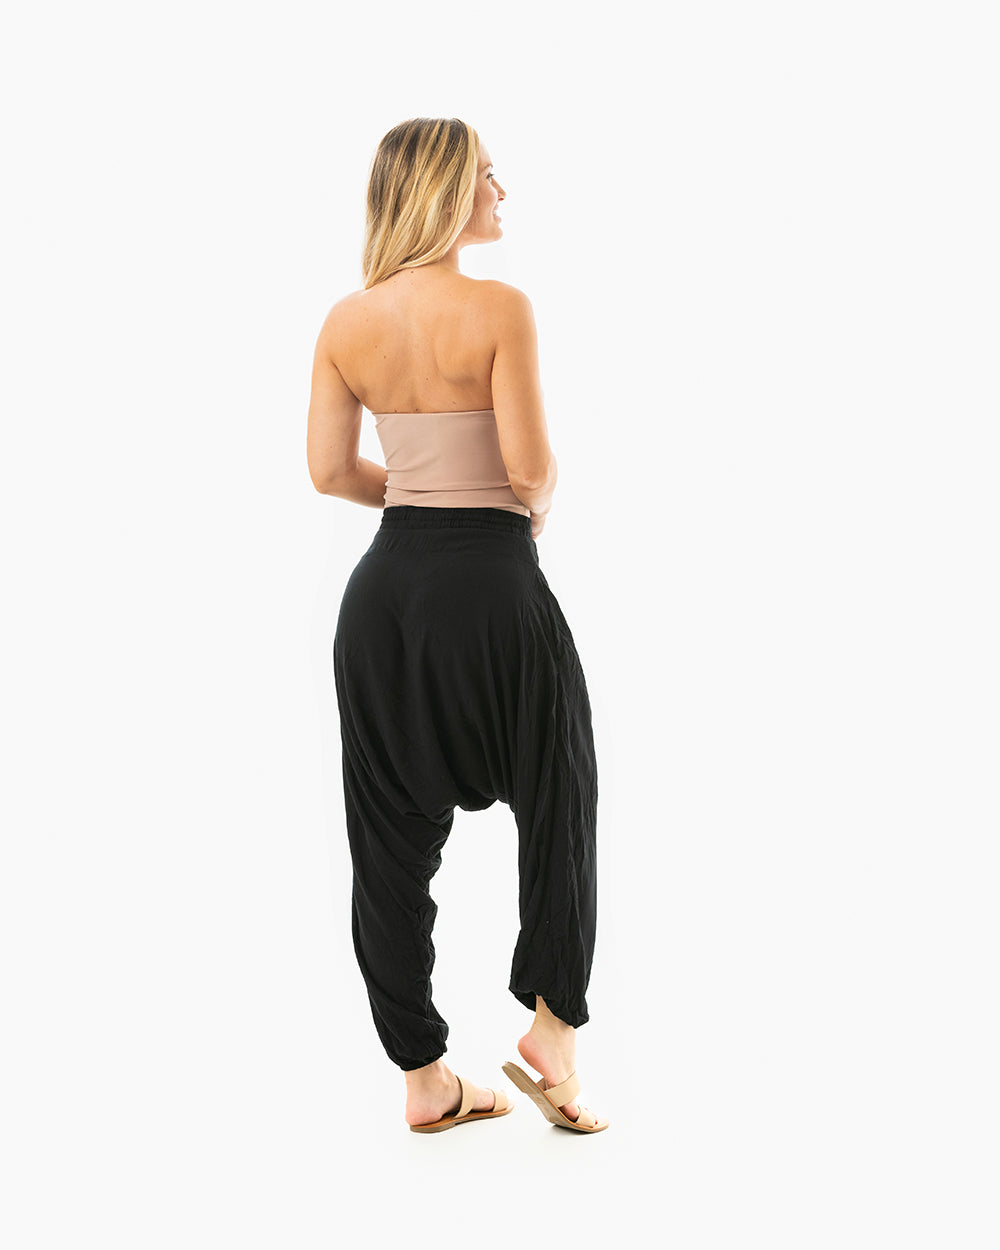 ❤ellazhu Mens Baggy Pants Elastic Waist Black Harem Pants for Men Yoga